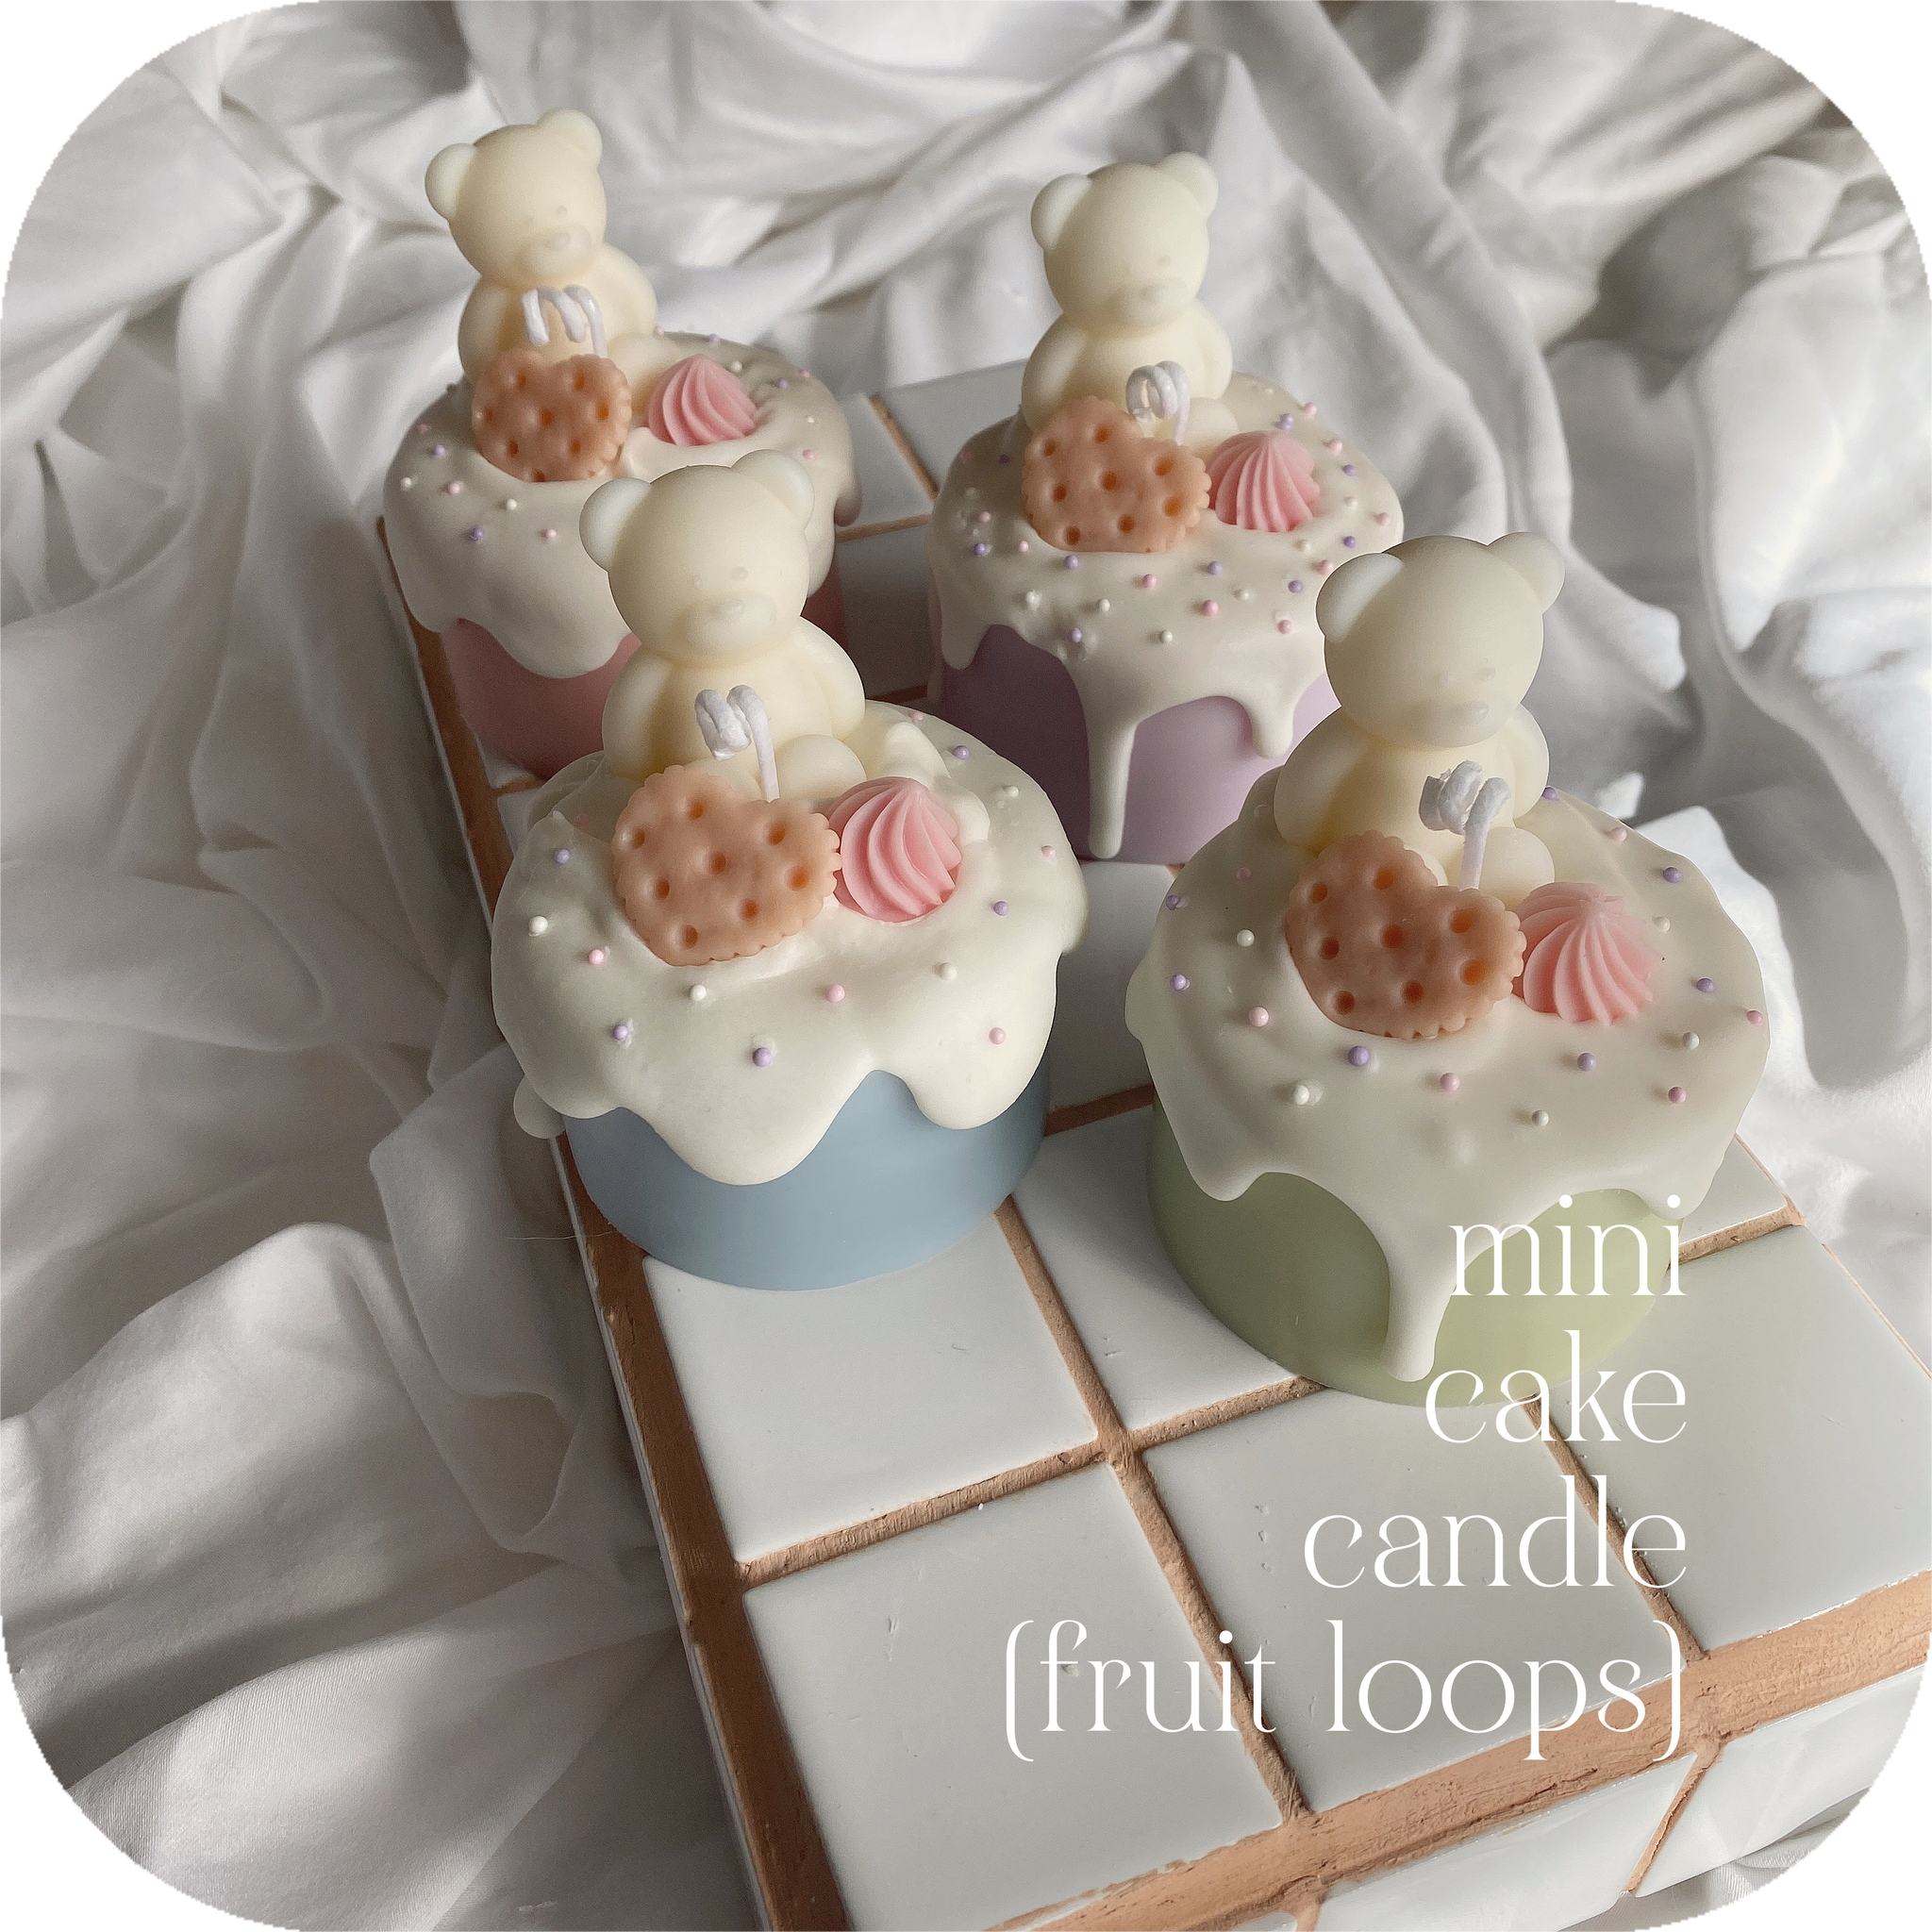 mini cake candle (fruit loops)